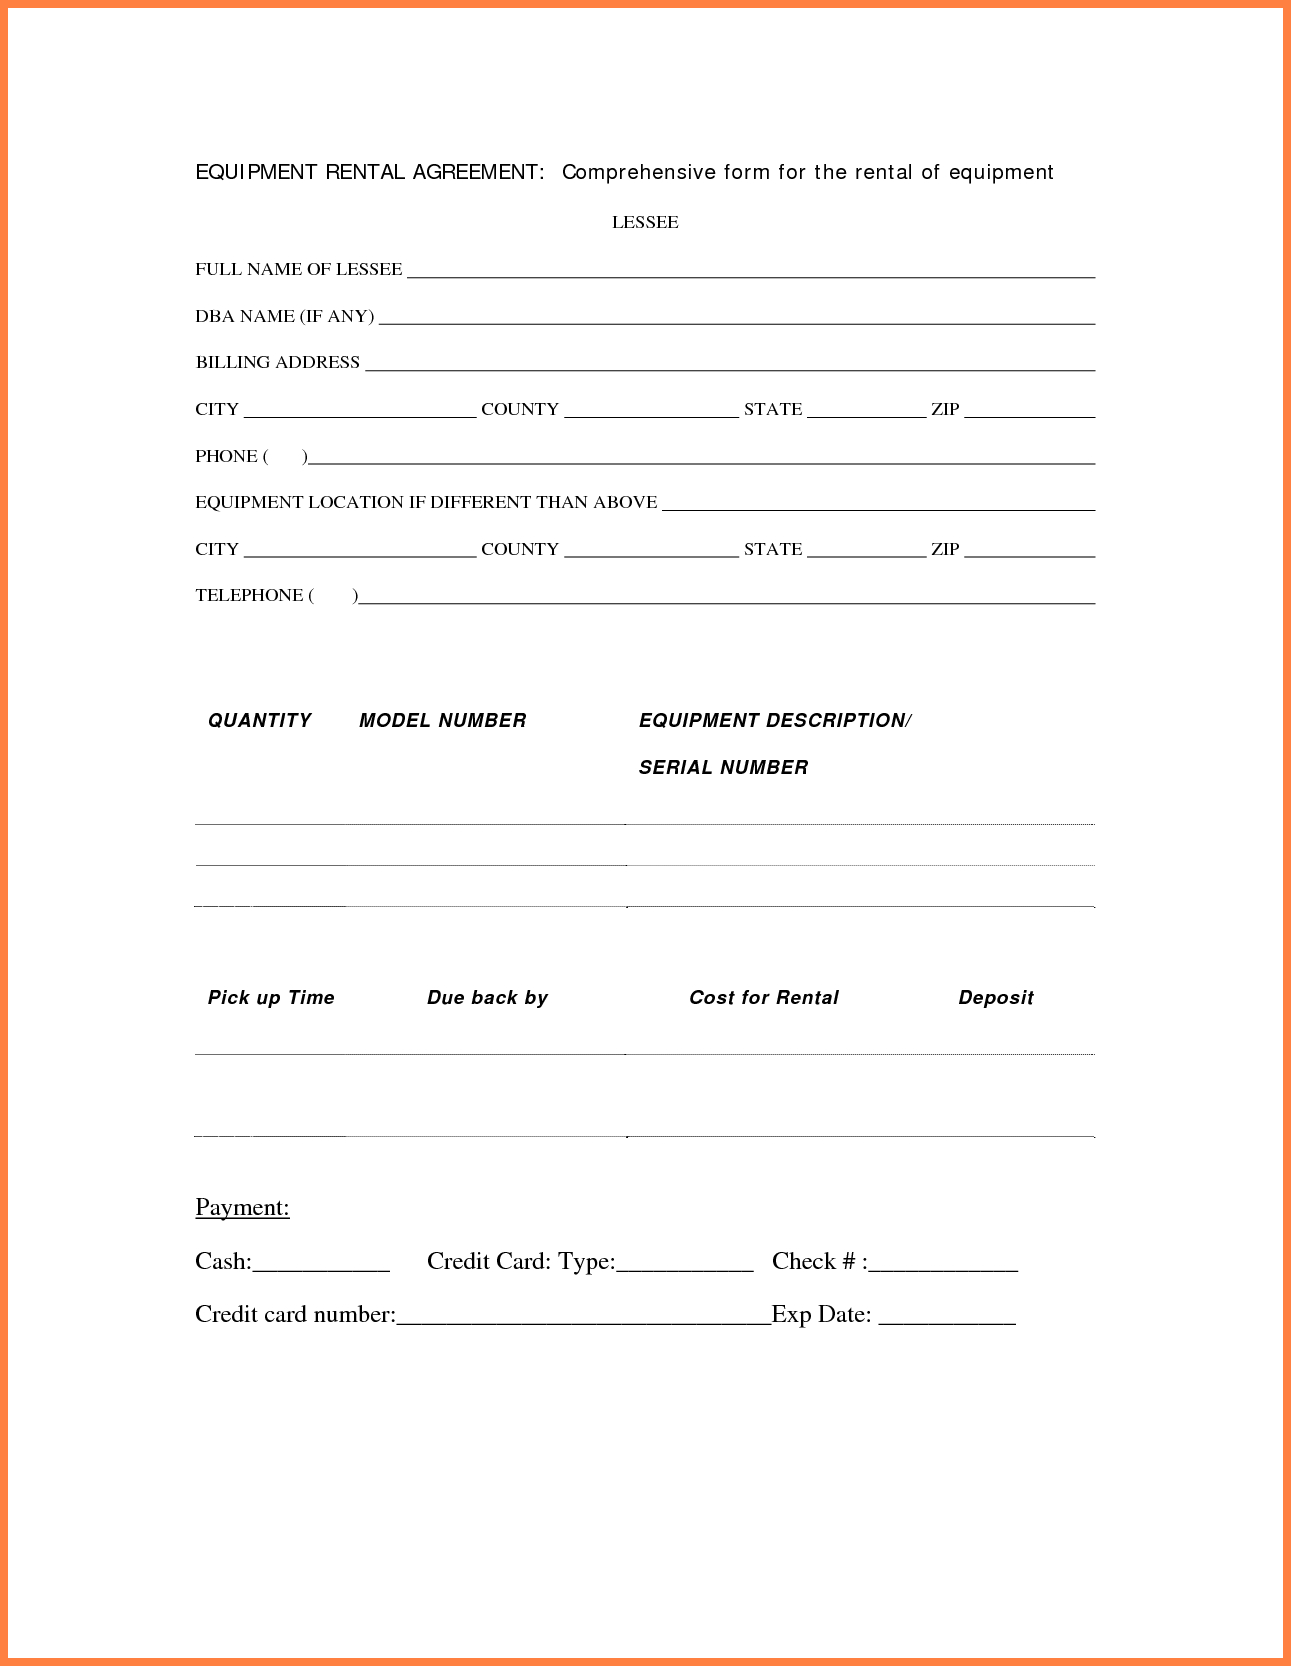 Contract Rental Agreement Template 003 Equipment Rental Agreement Template Contract Lease Form